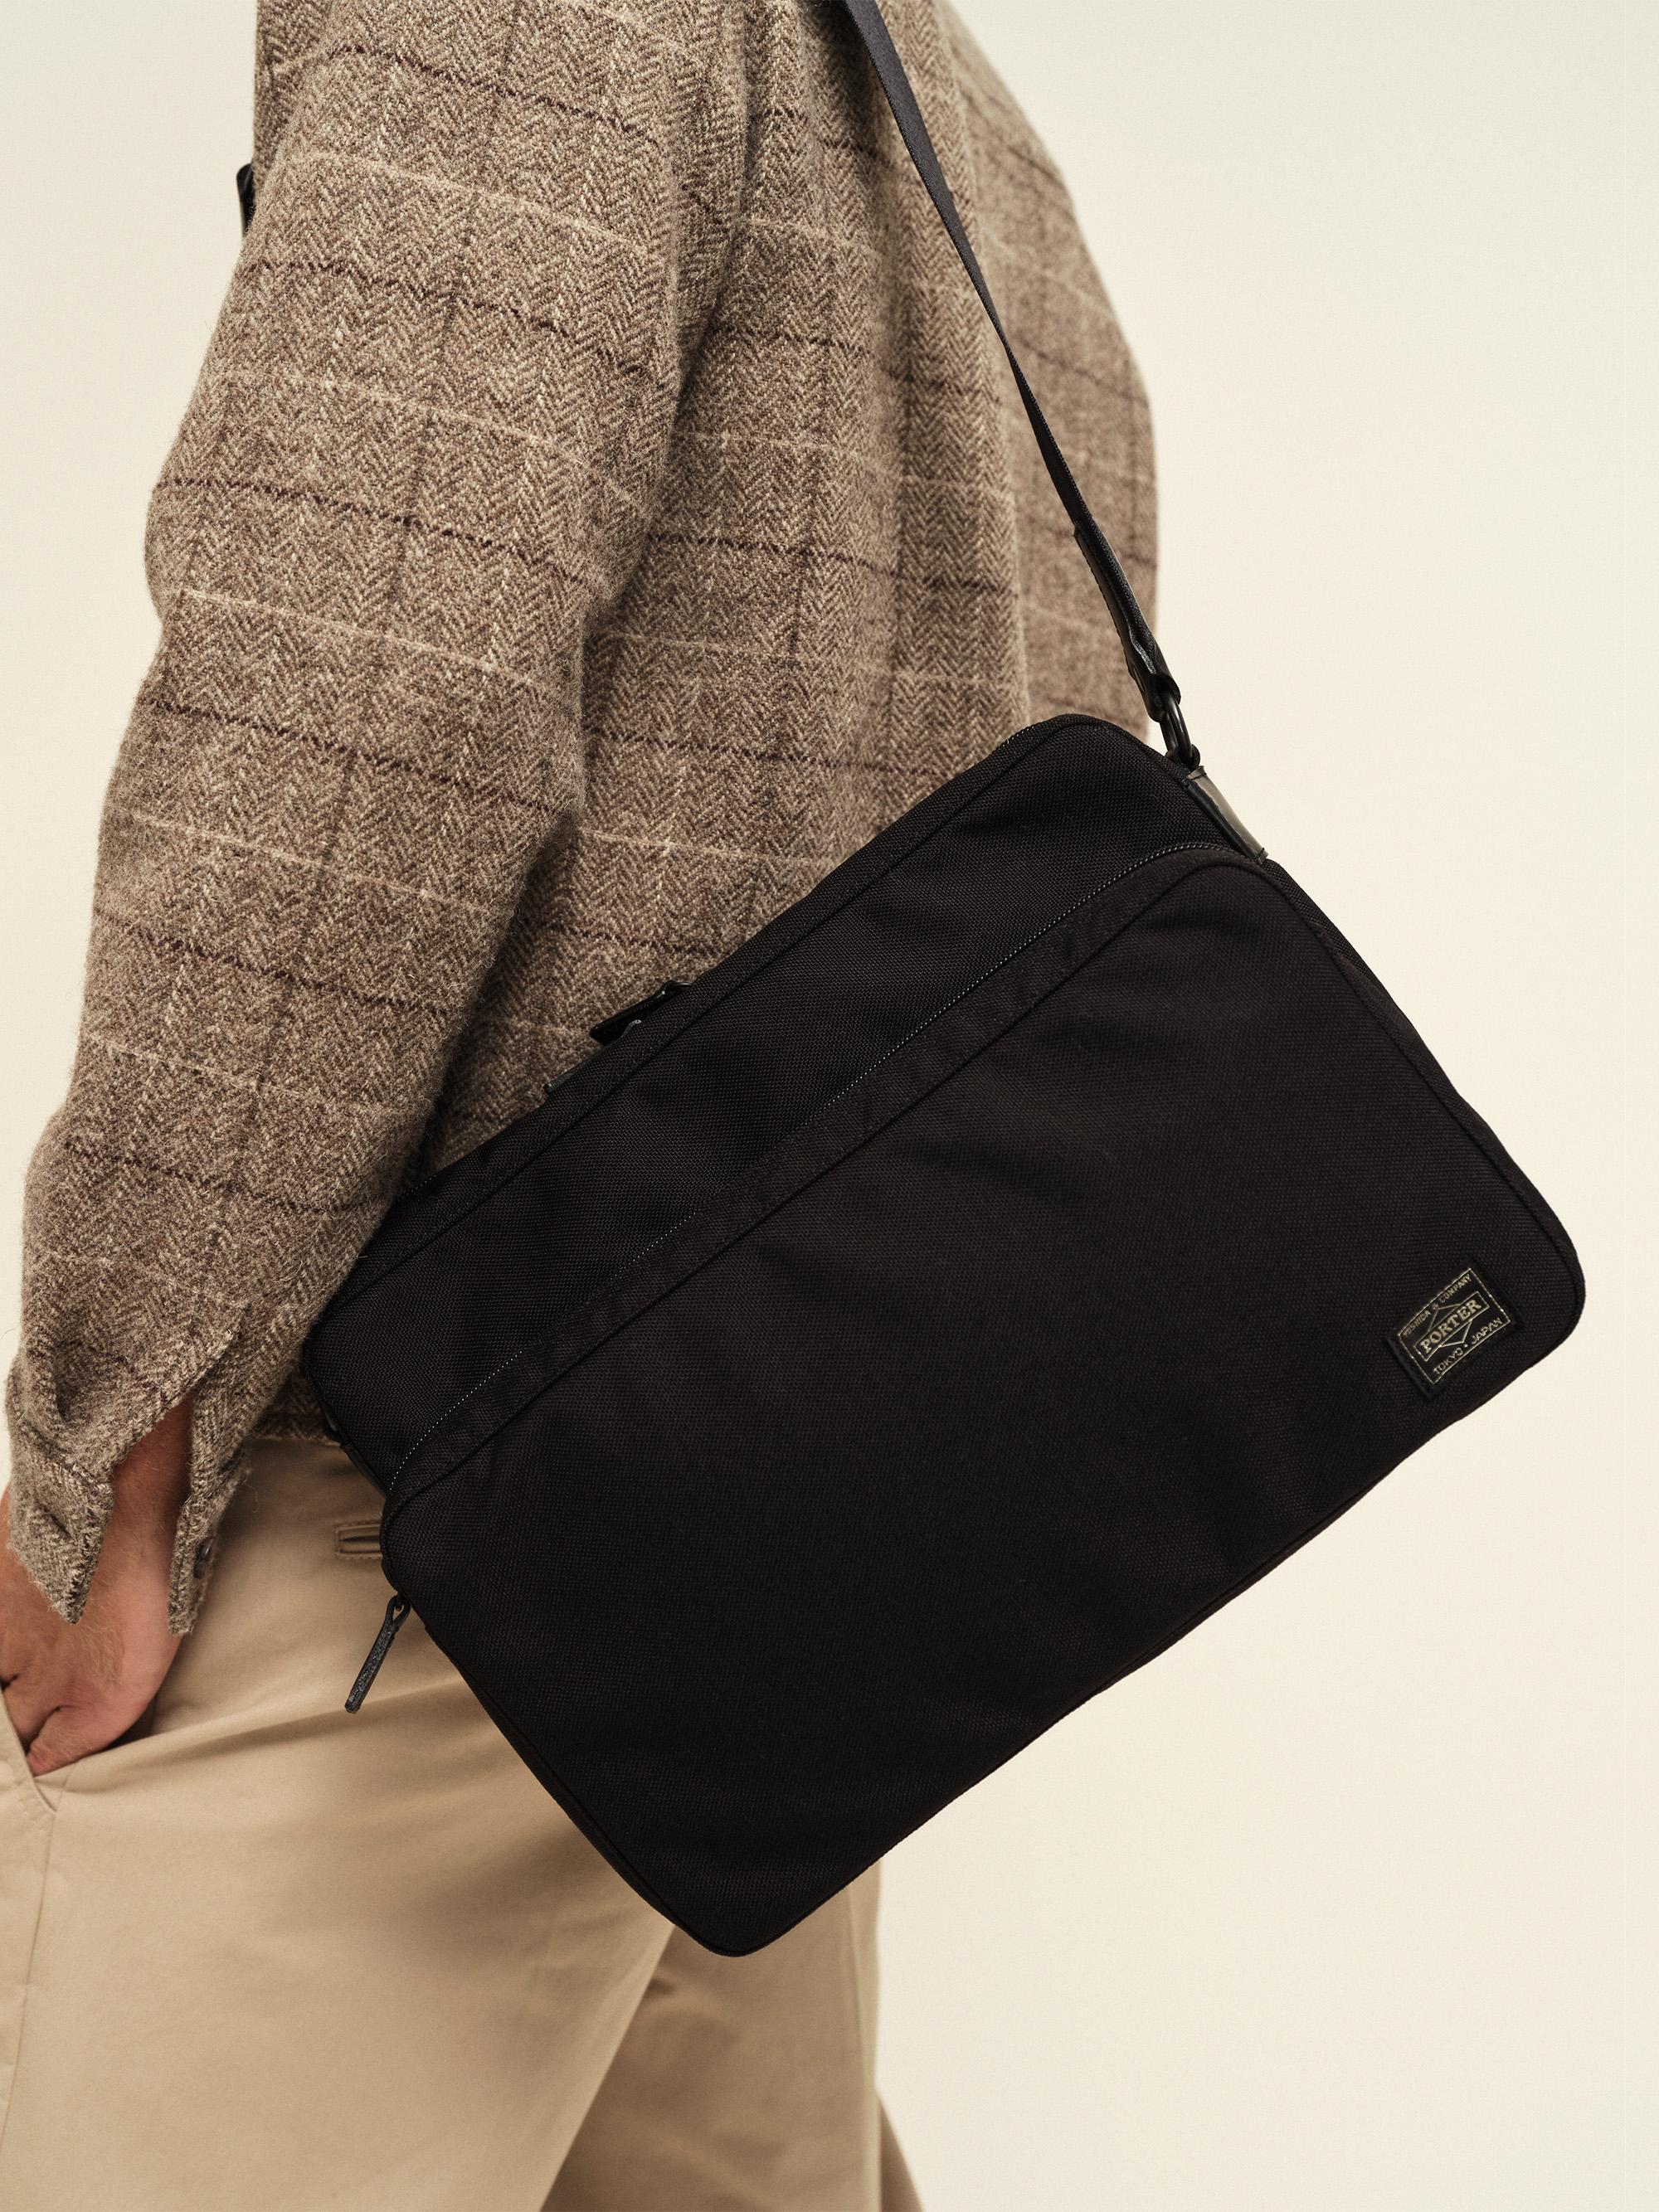 Shoulder bag - Porter - Bags - Shop | Monocle